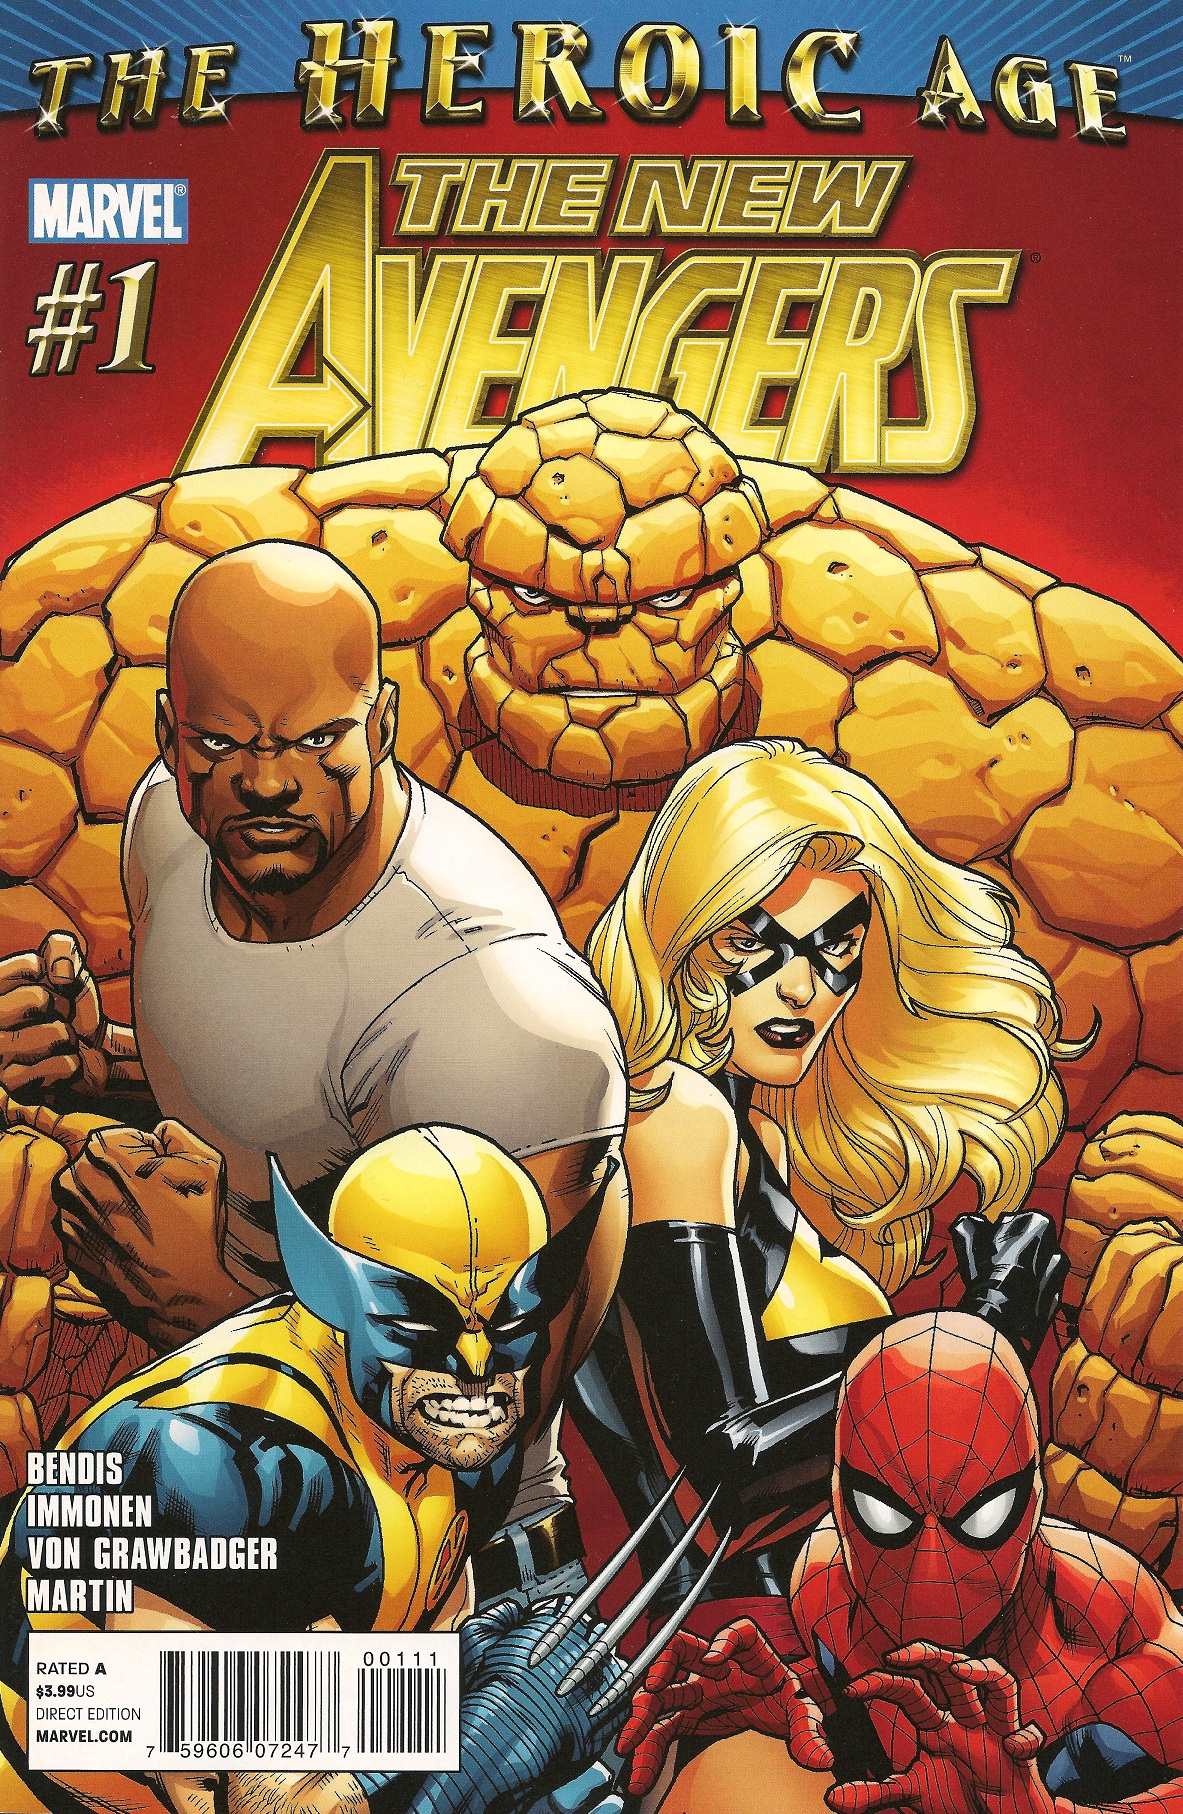 New Avengers Vol. 2 #1